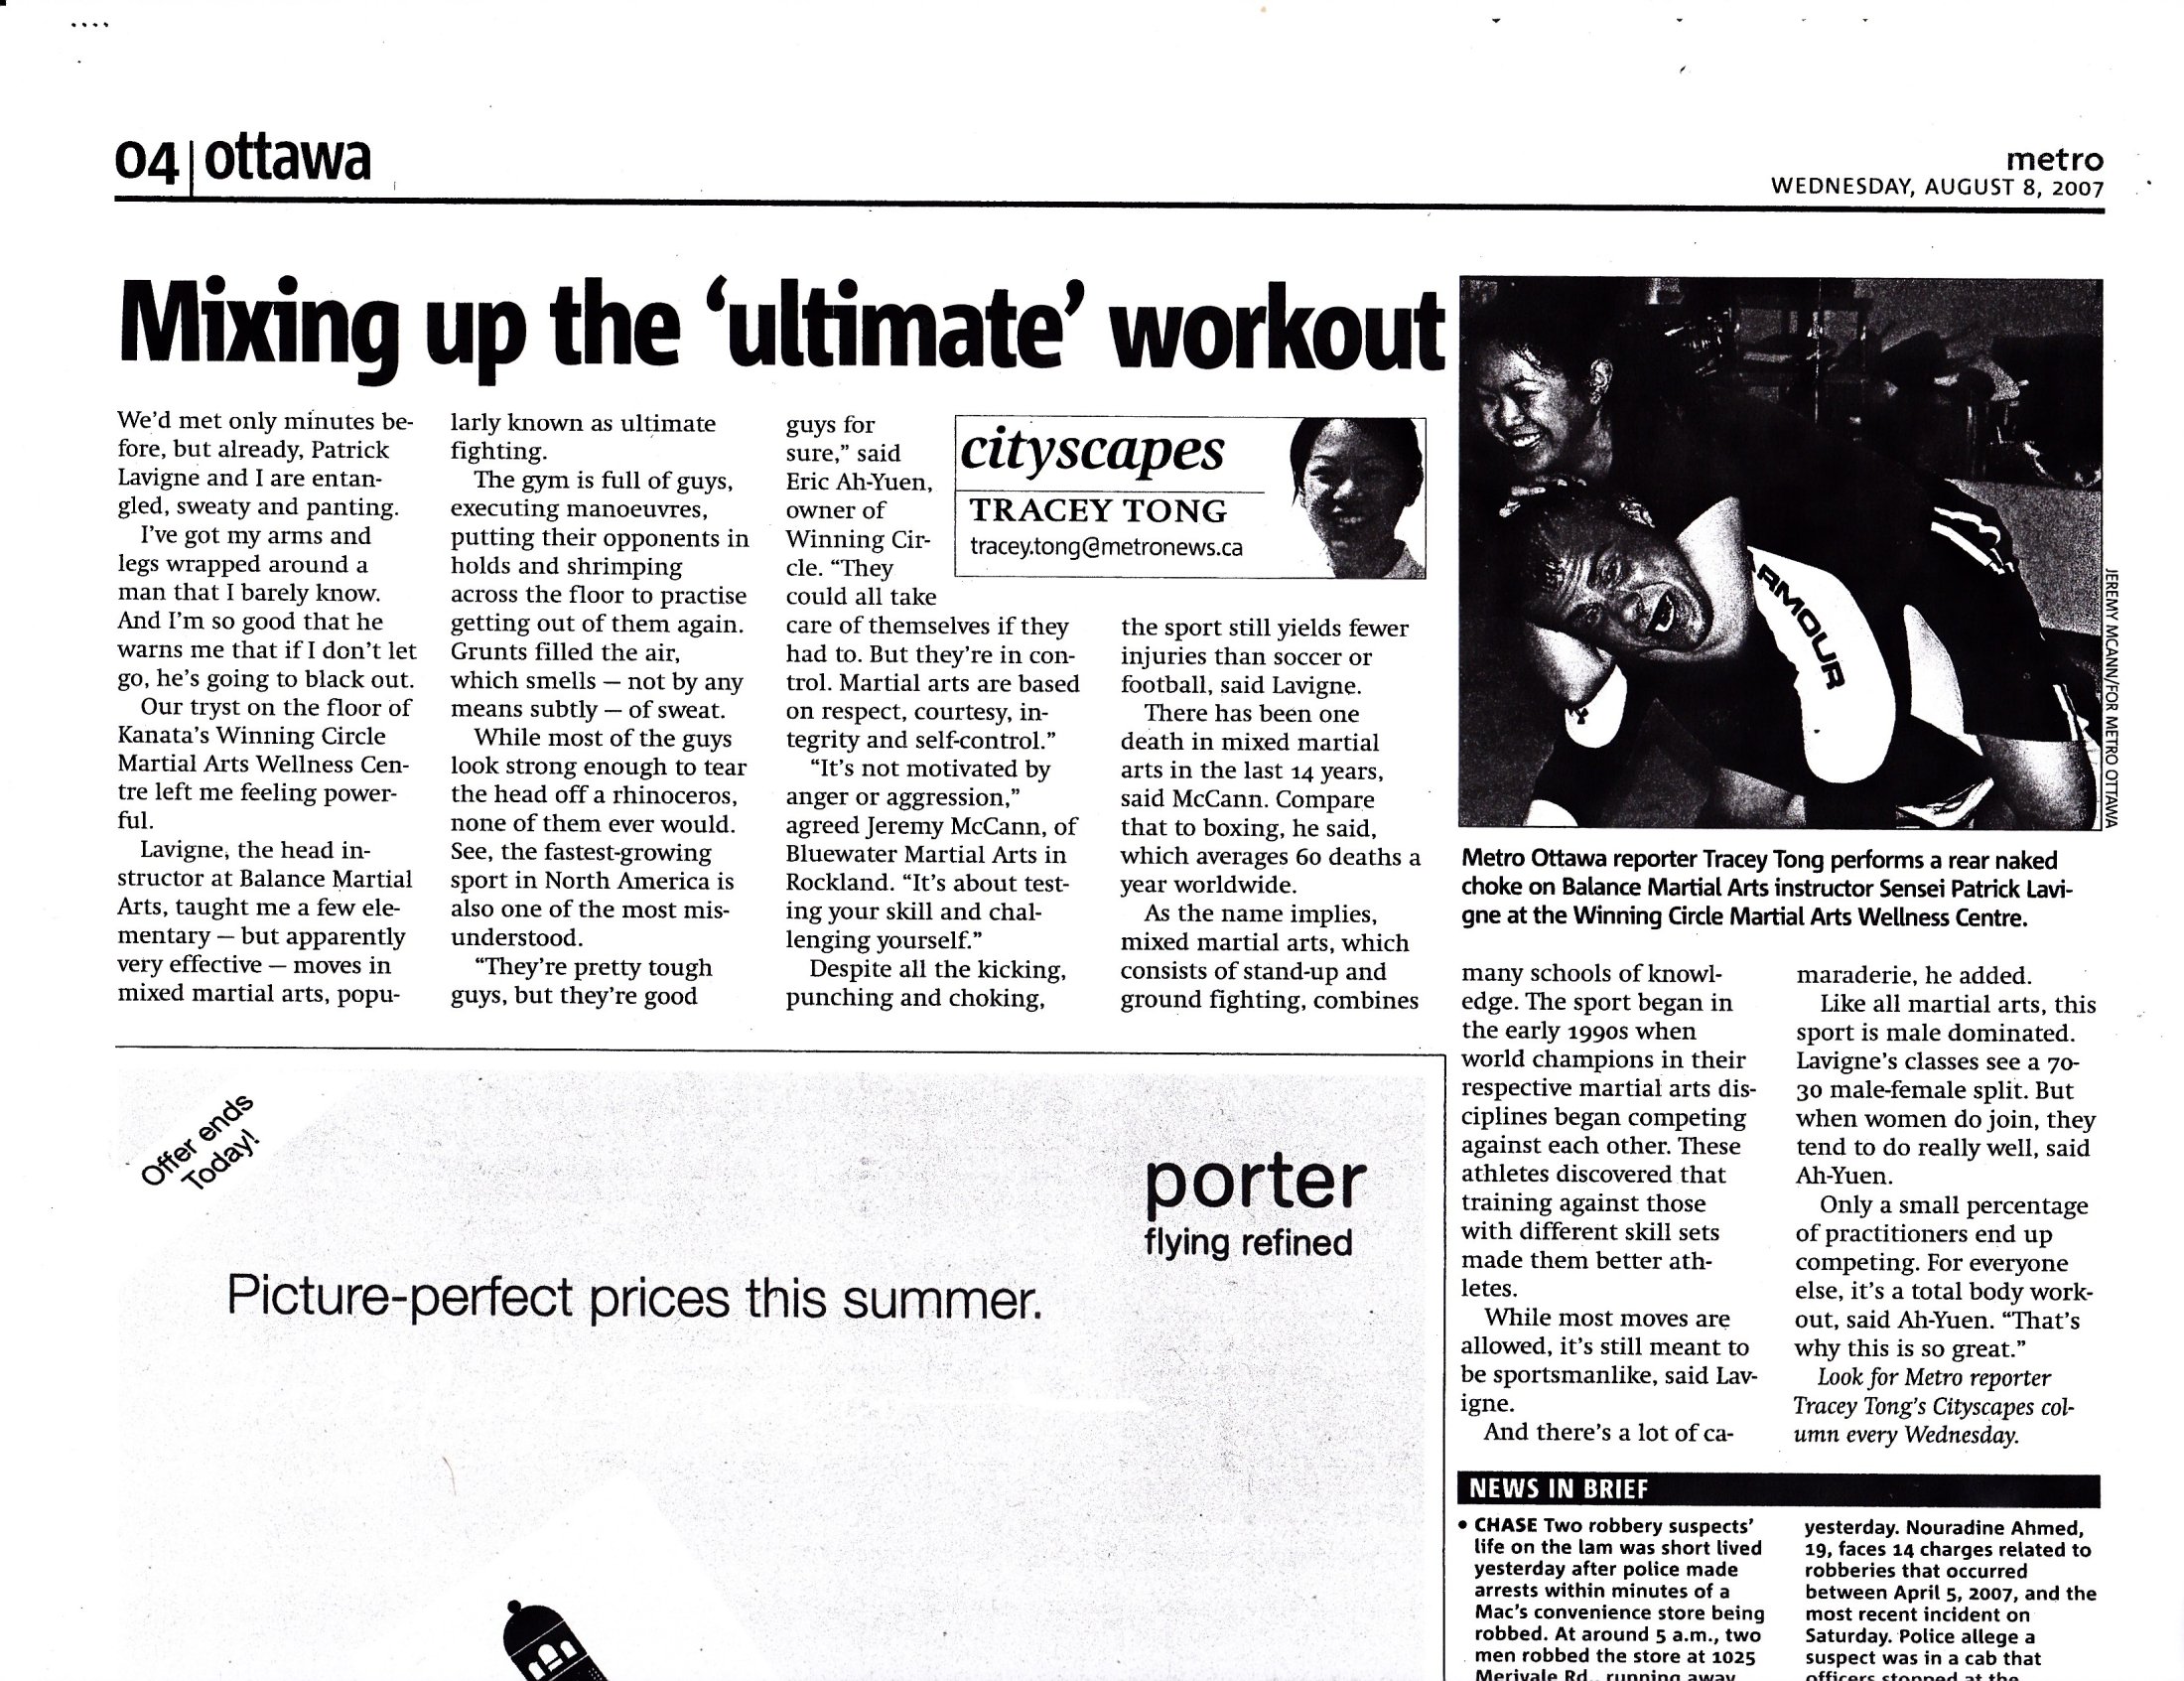  Metro Ottawa 2007 \"Mixing up the \'Ultimate\' workout\"